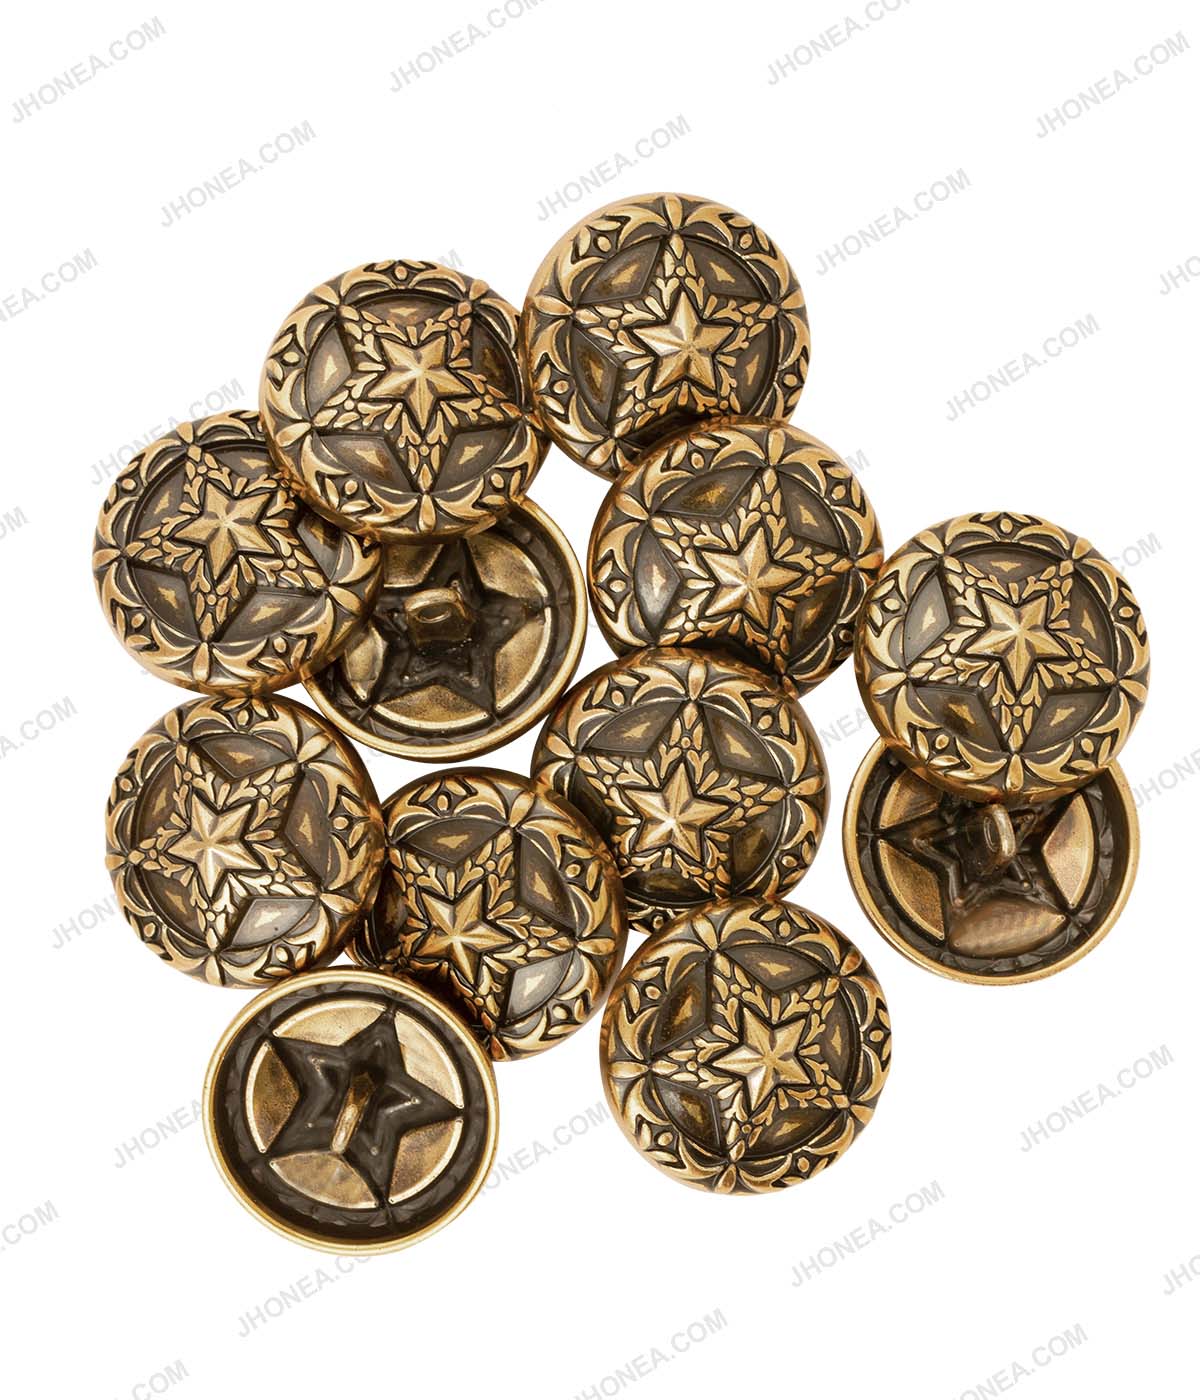 Premium Antique Vintage Star Design Metal Buttons for Coats in Antique Gold Color